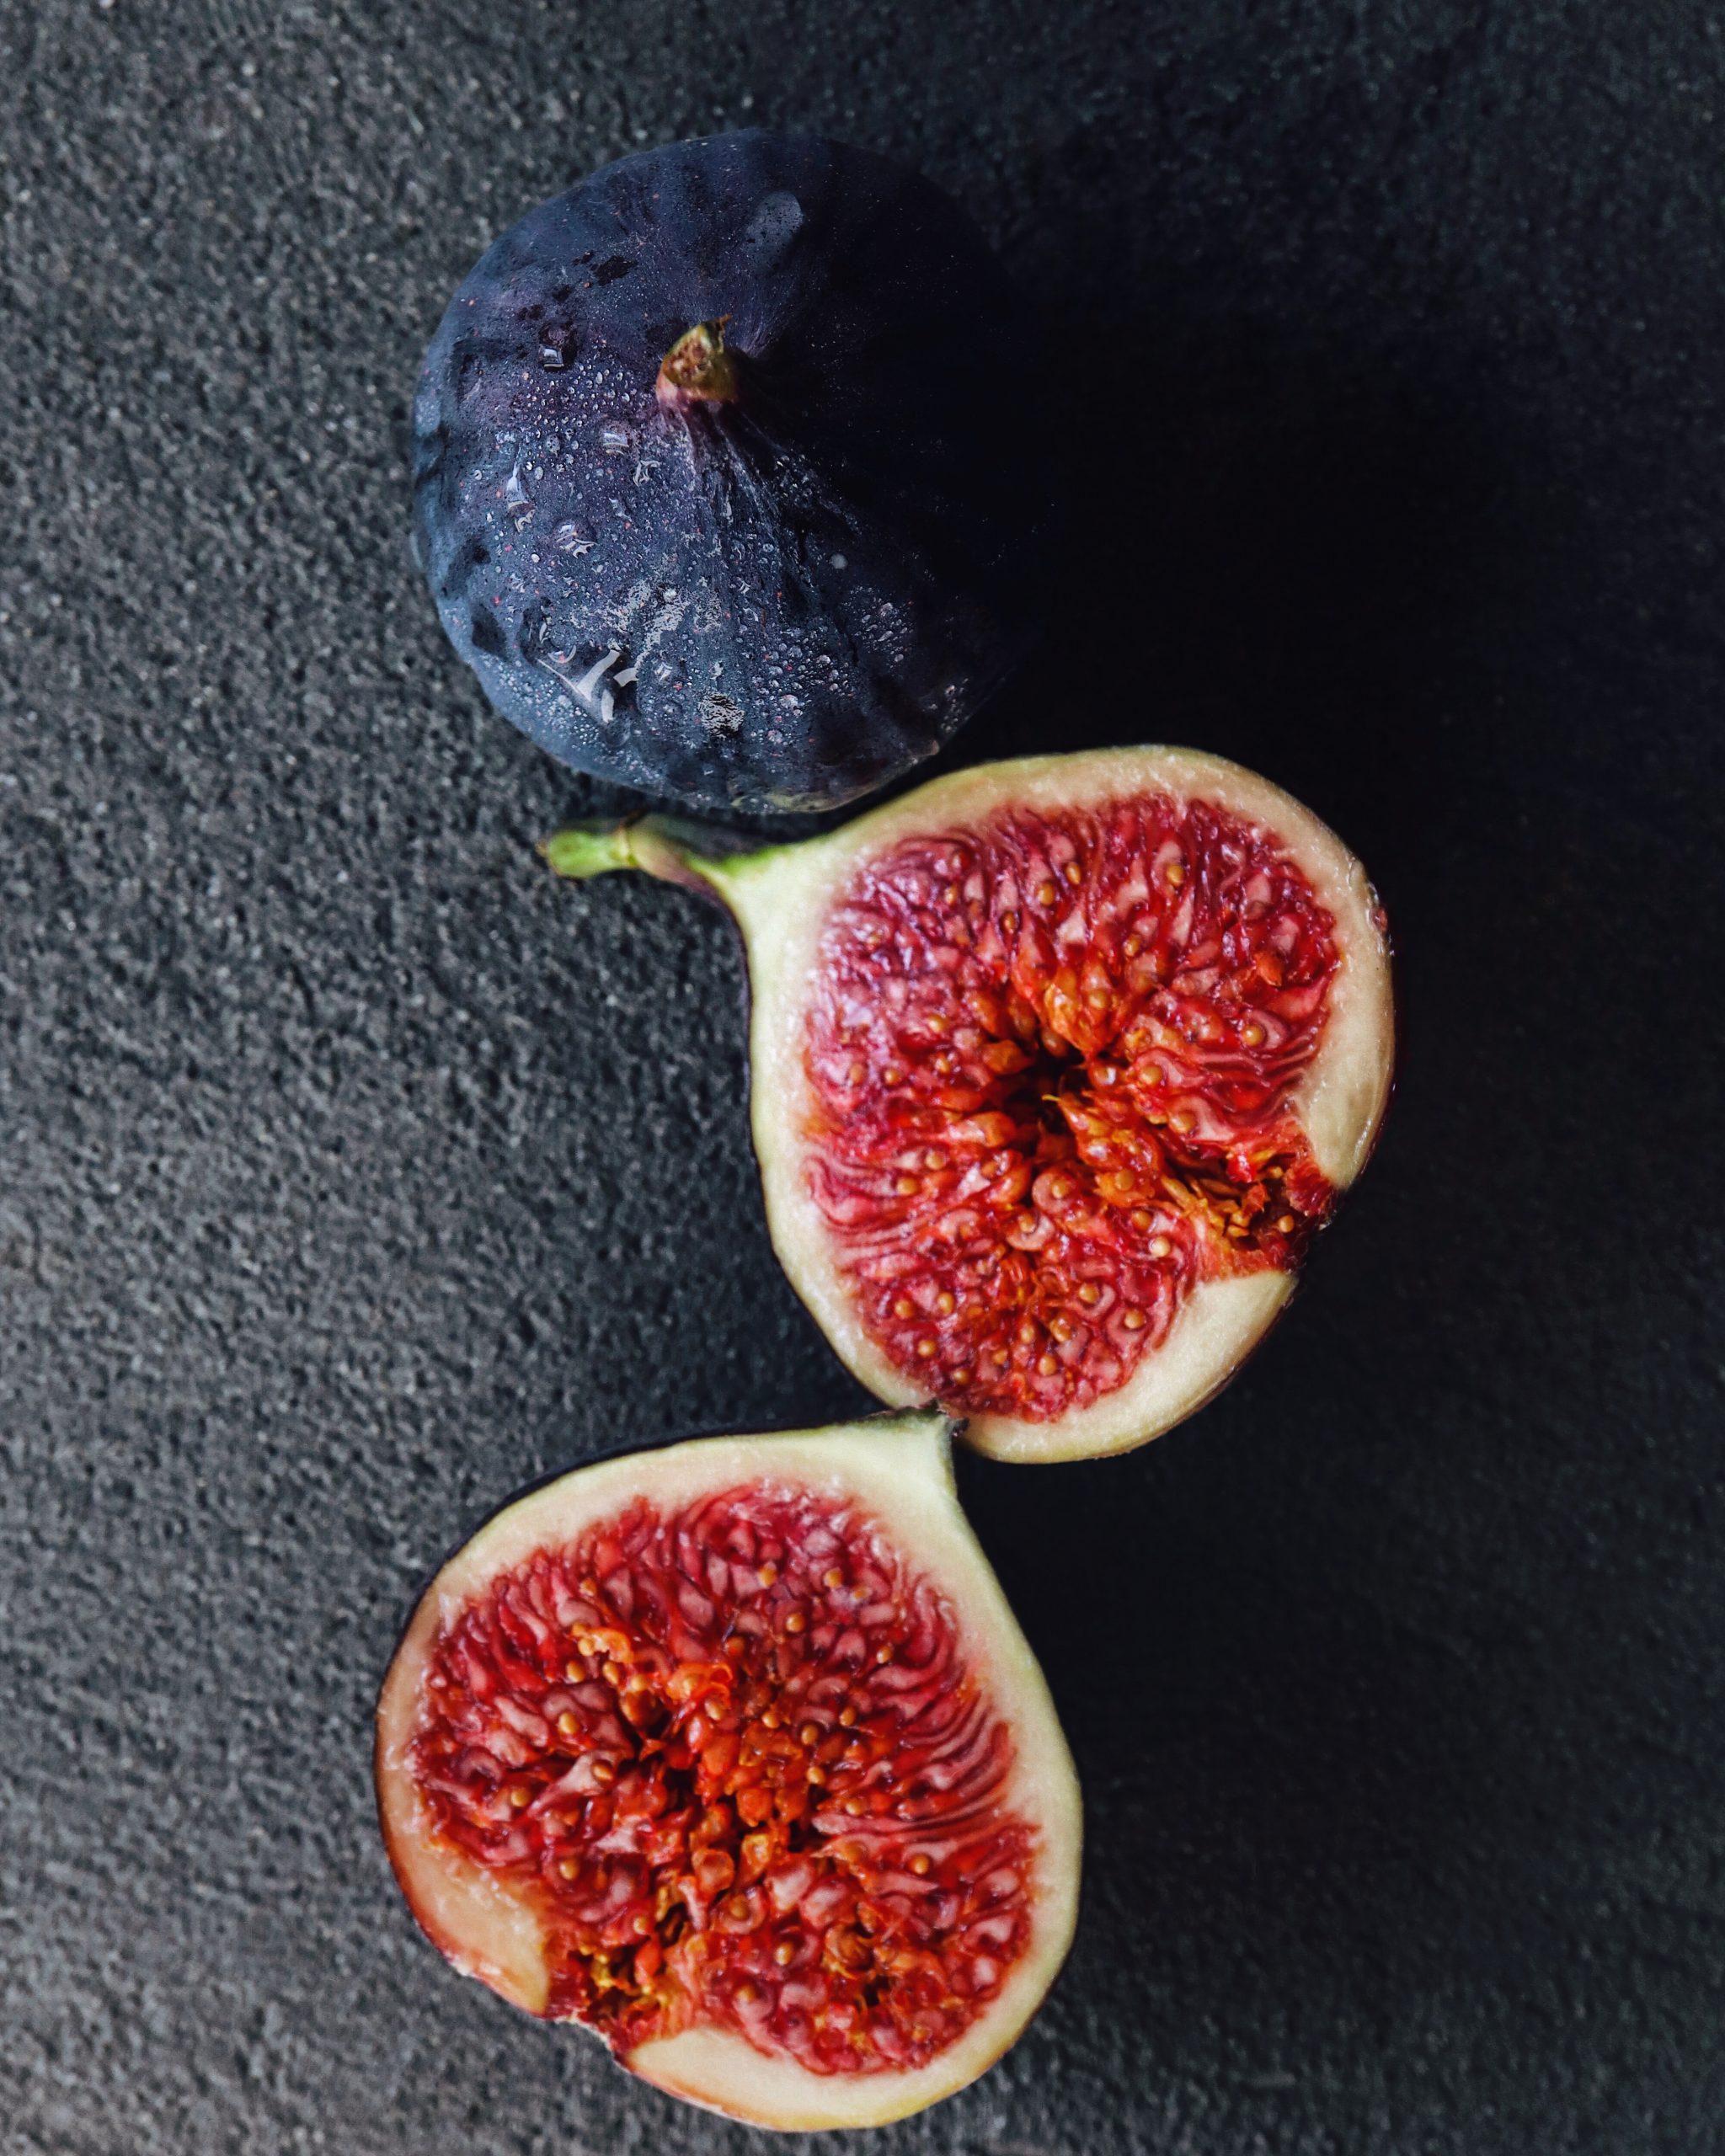 How Many Figs Does A Tree Produce?